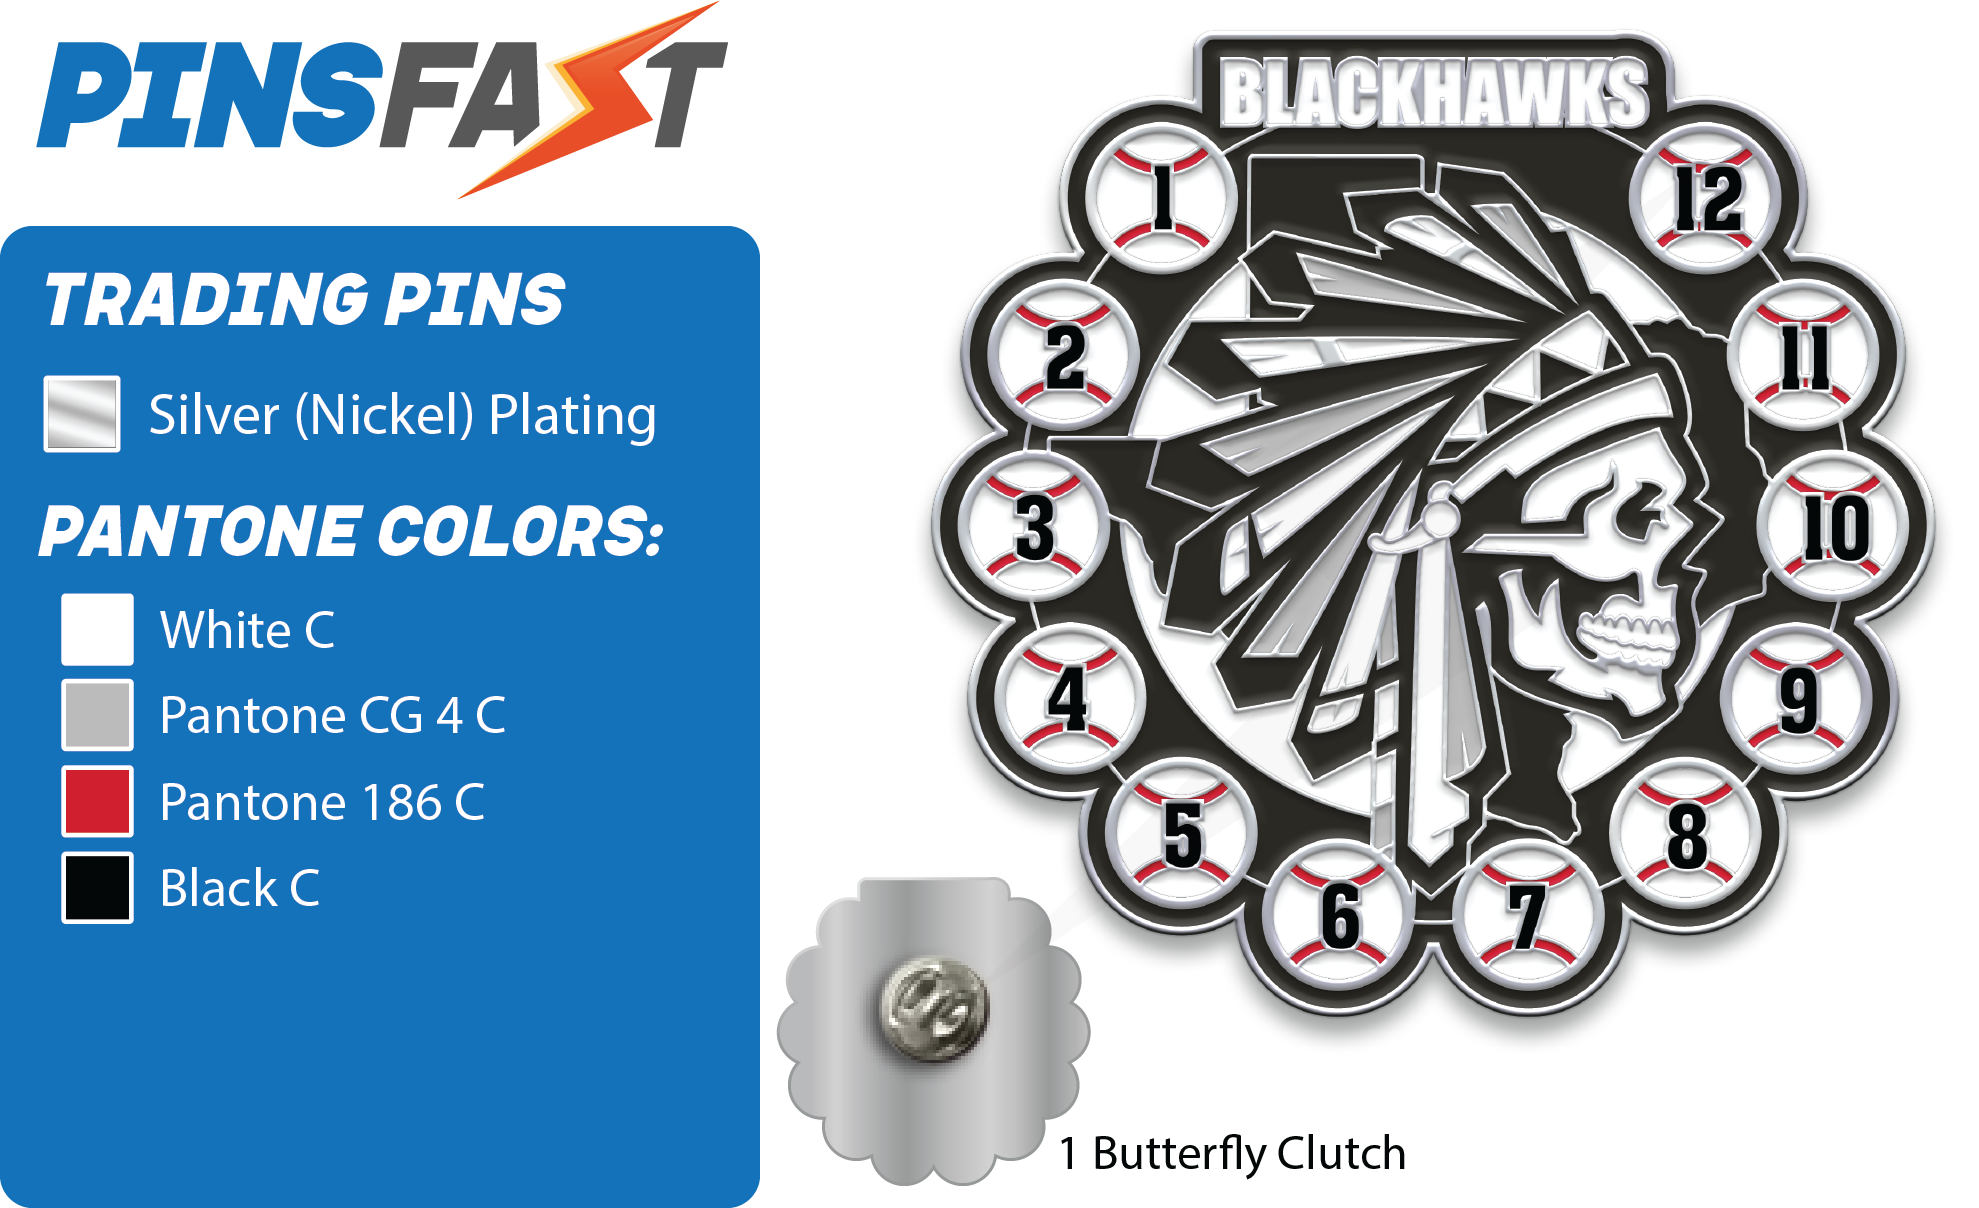 blackhawks trading pins